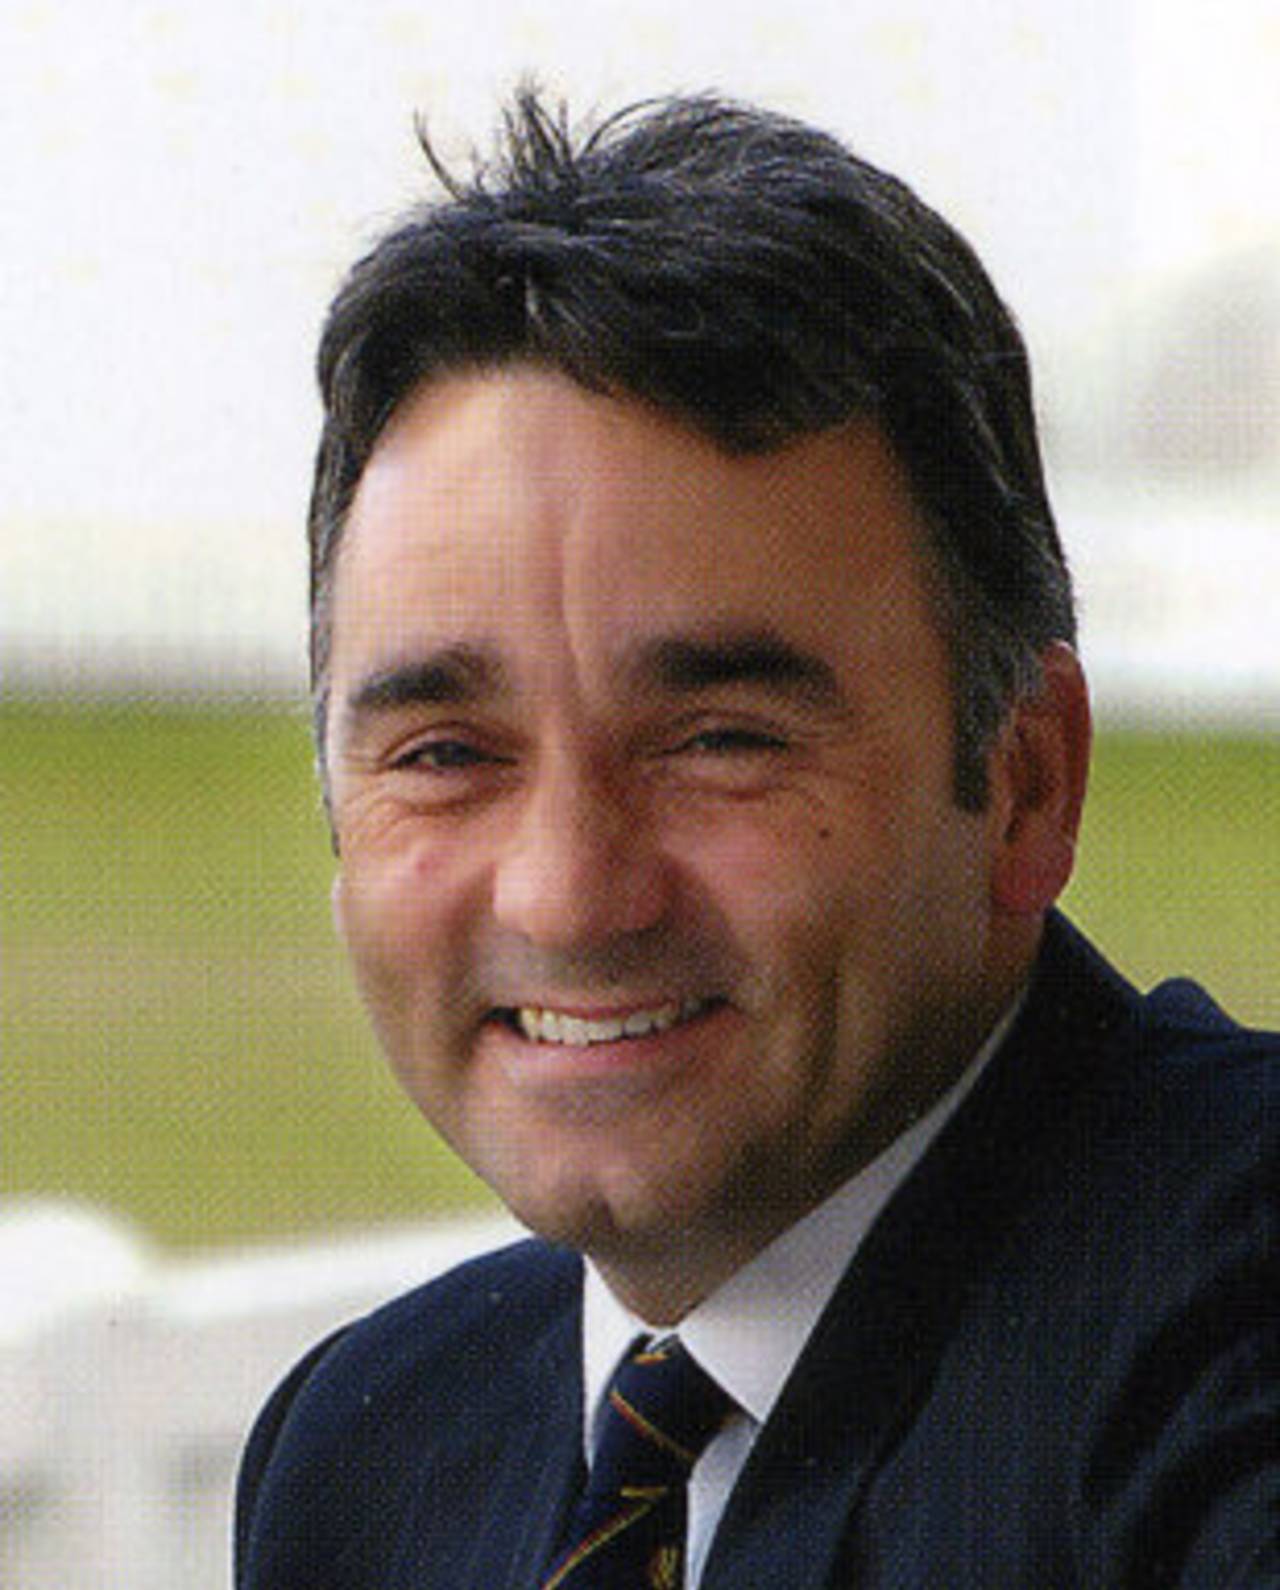 Keith Bradshaw at Lord's, October 2006